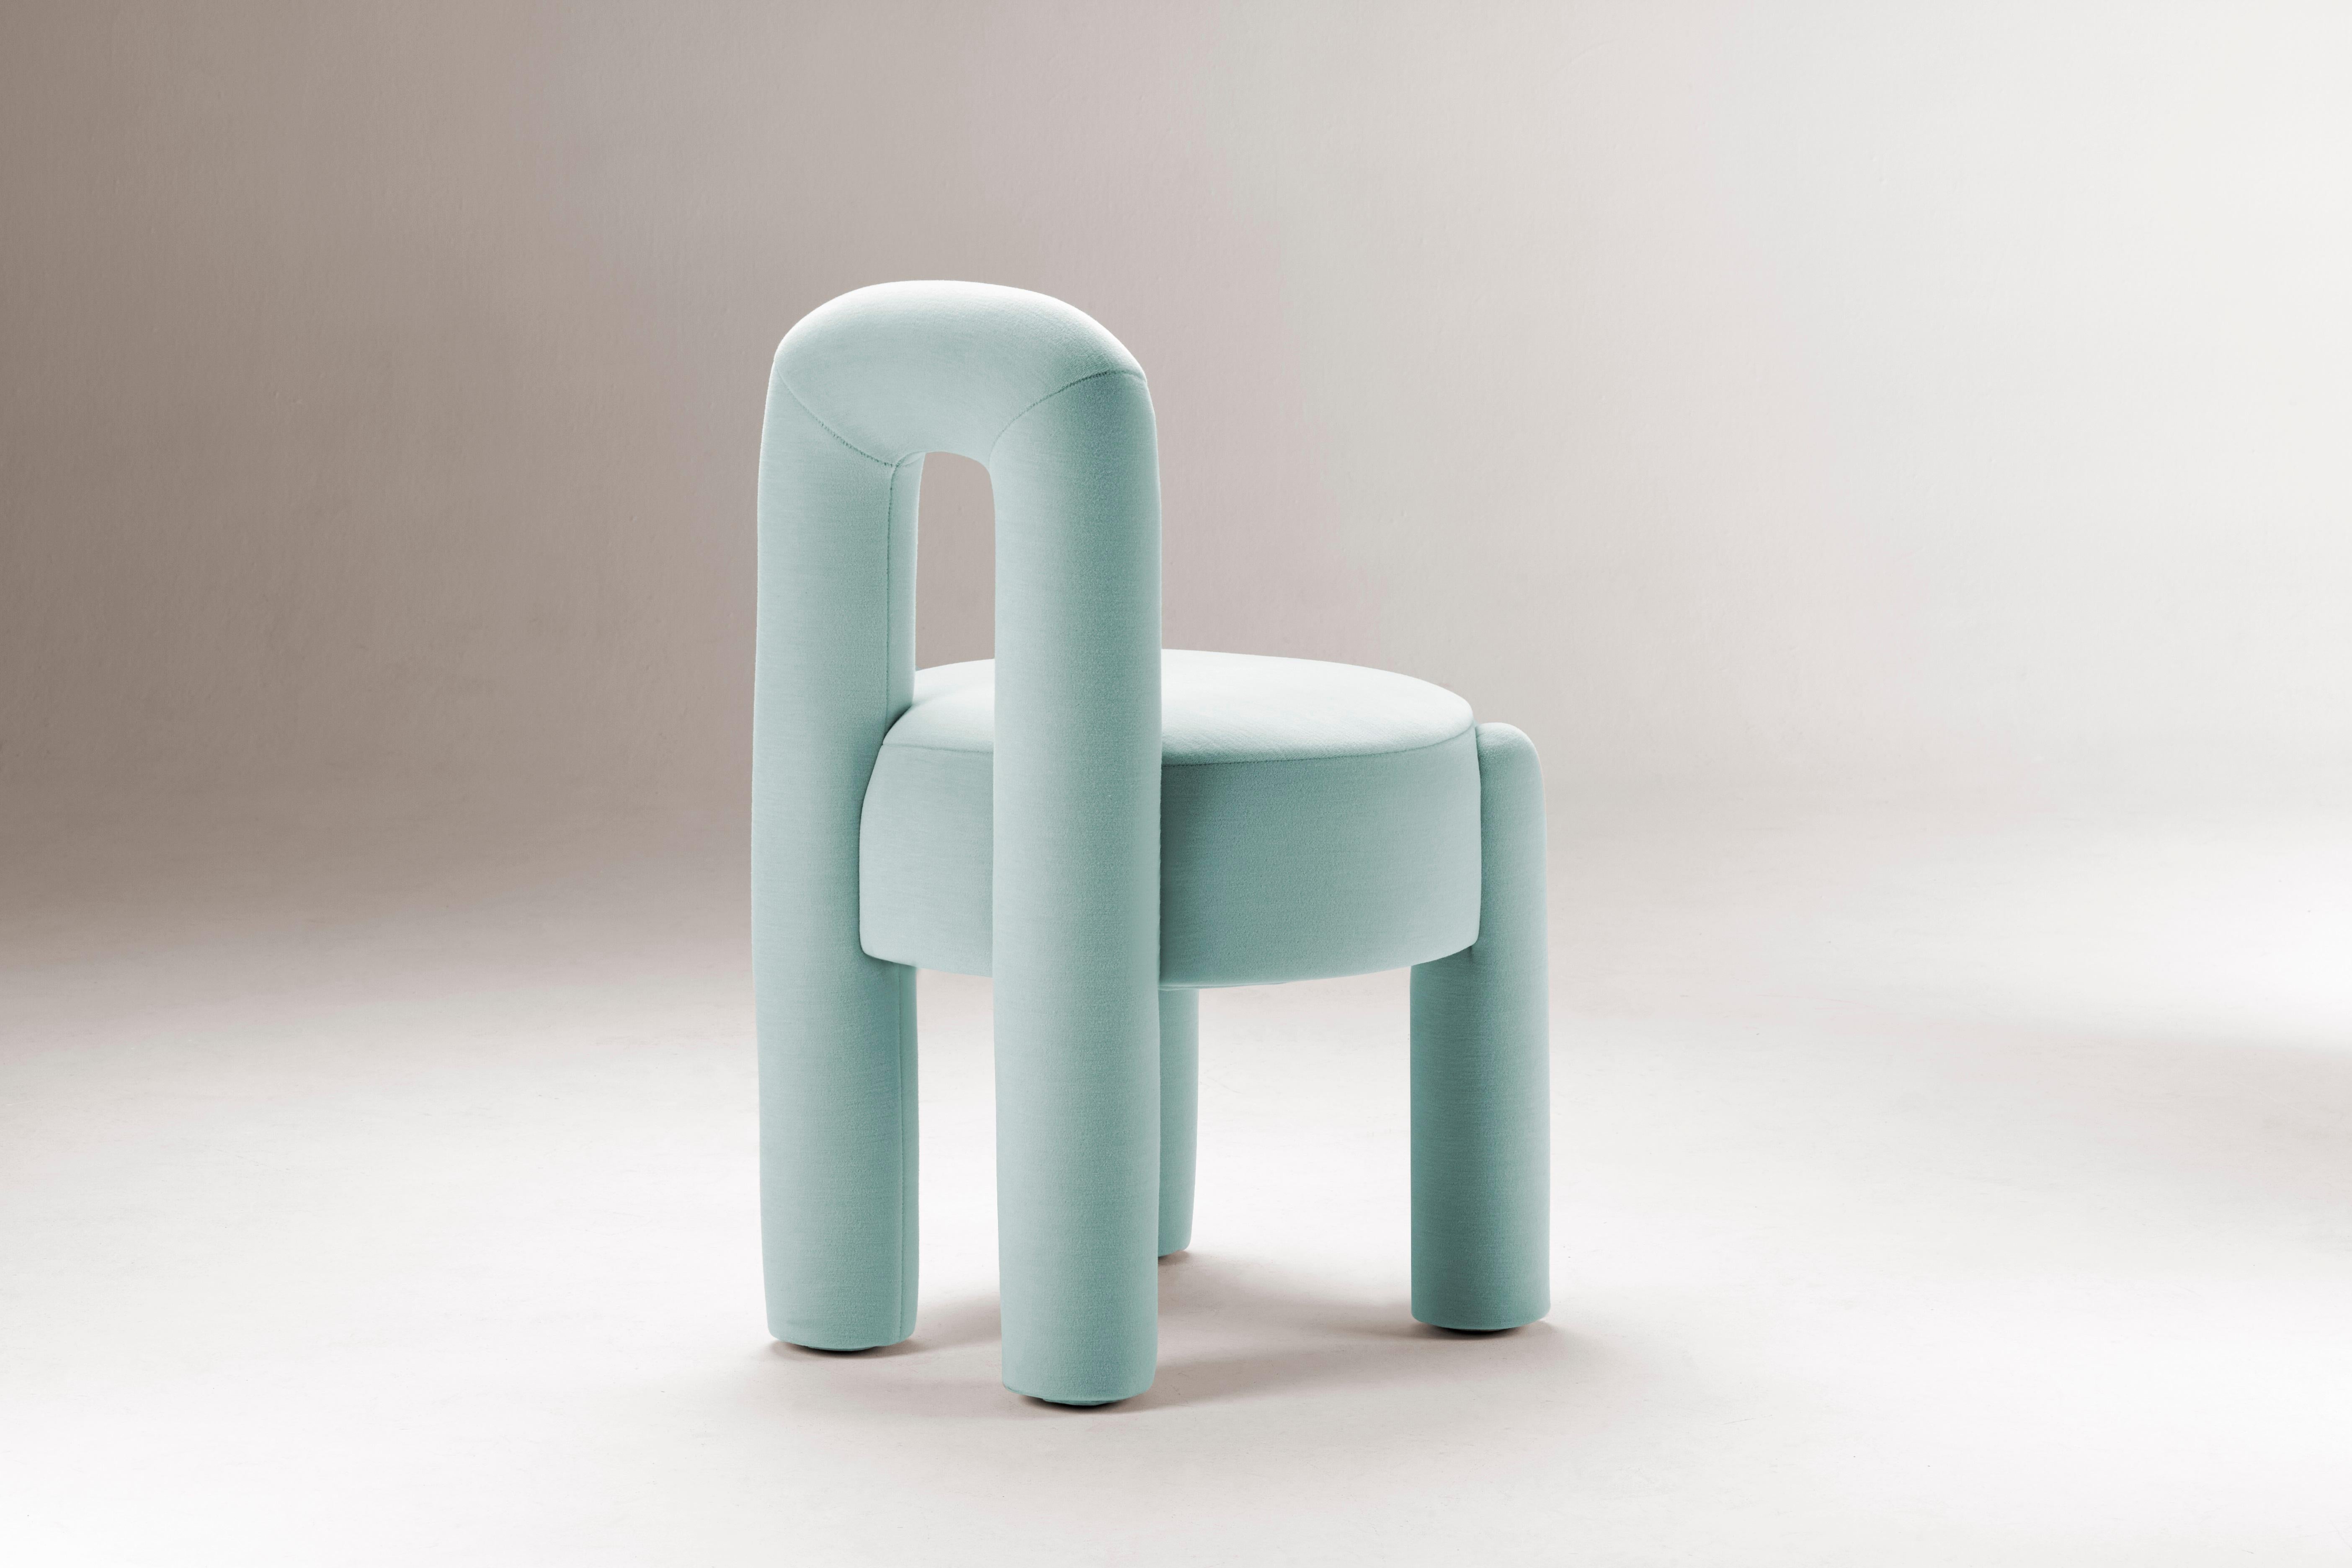 Portuguese DOOQ! Milan New! Organic Modern Marlon Chair, Mint Kvadrat by P.Franceschini For Sale